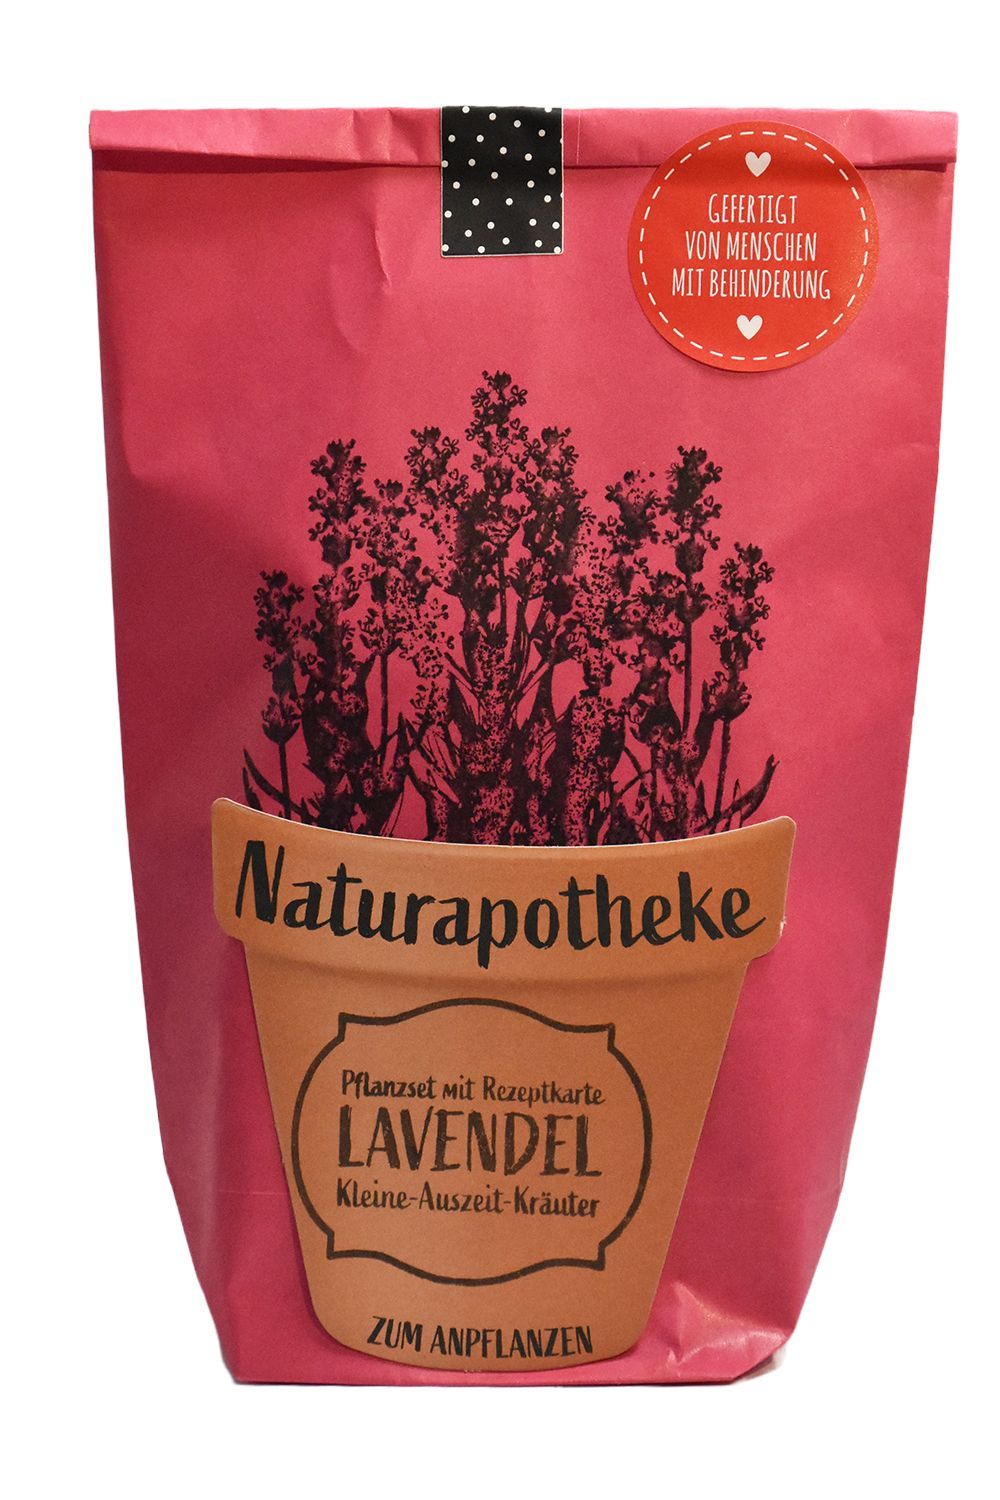 DIY Naturapotheke - Lavendel zum Anpflanzen